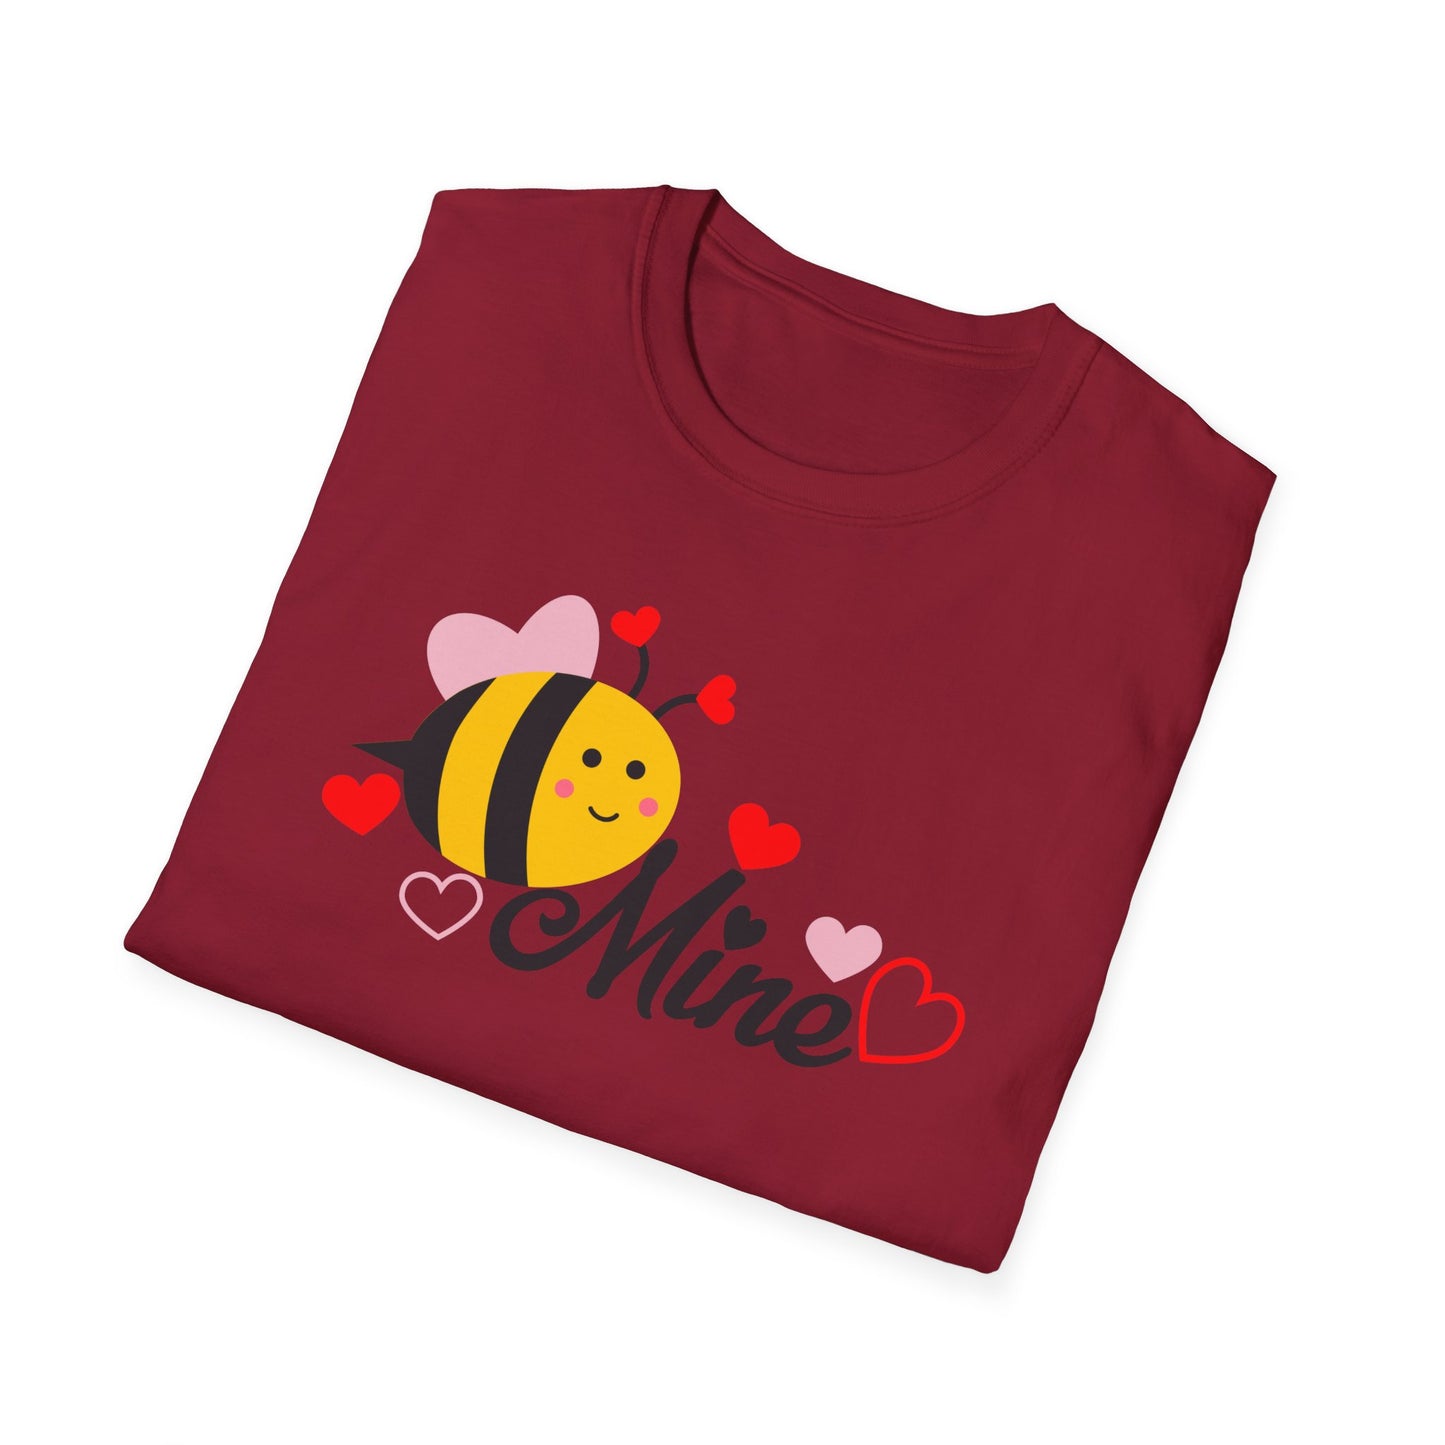 Be Mine Valentine's Day Shirts for a Heartfelt Celebration